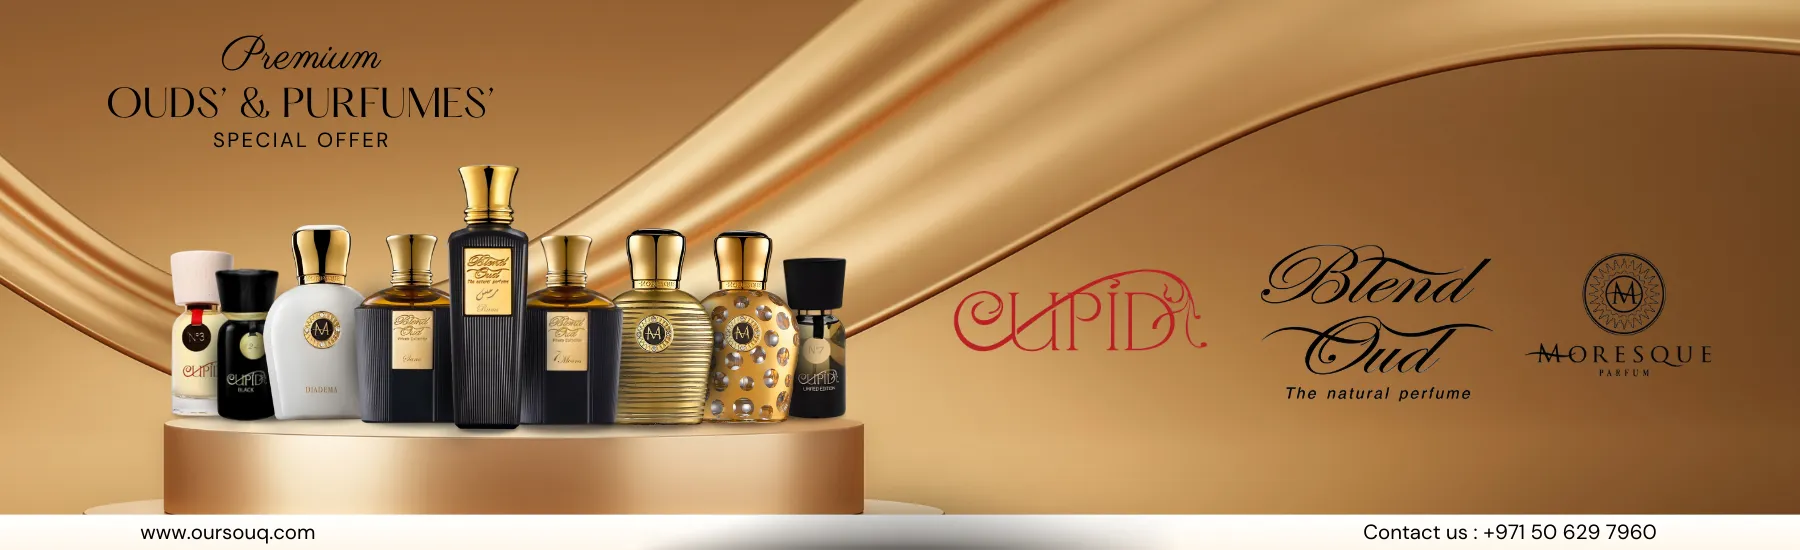 luxury affordable perfumes uae Oud and premium purfumes